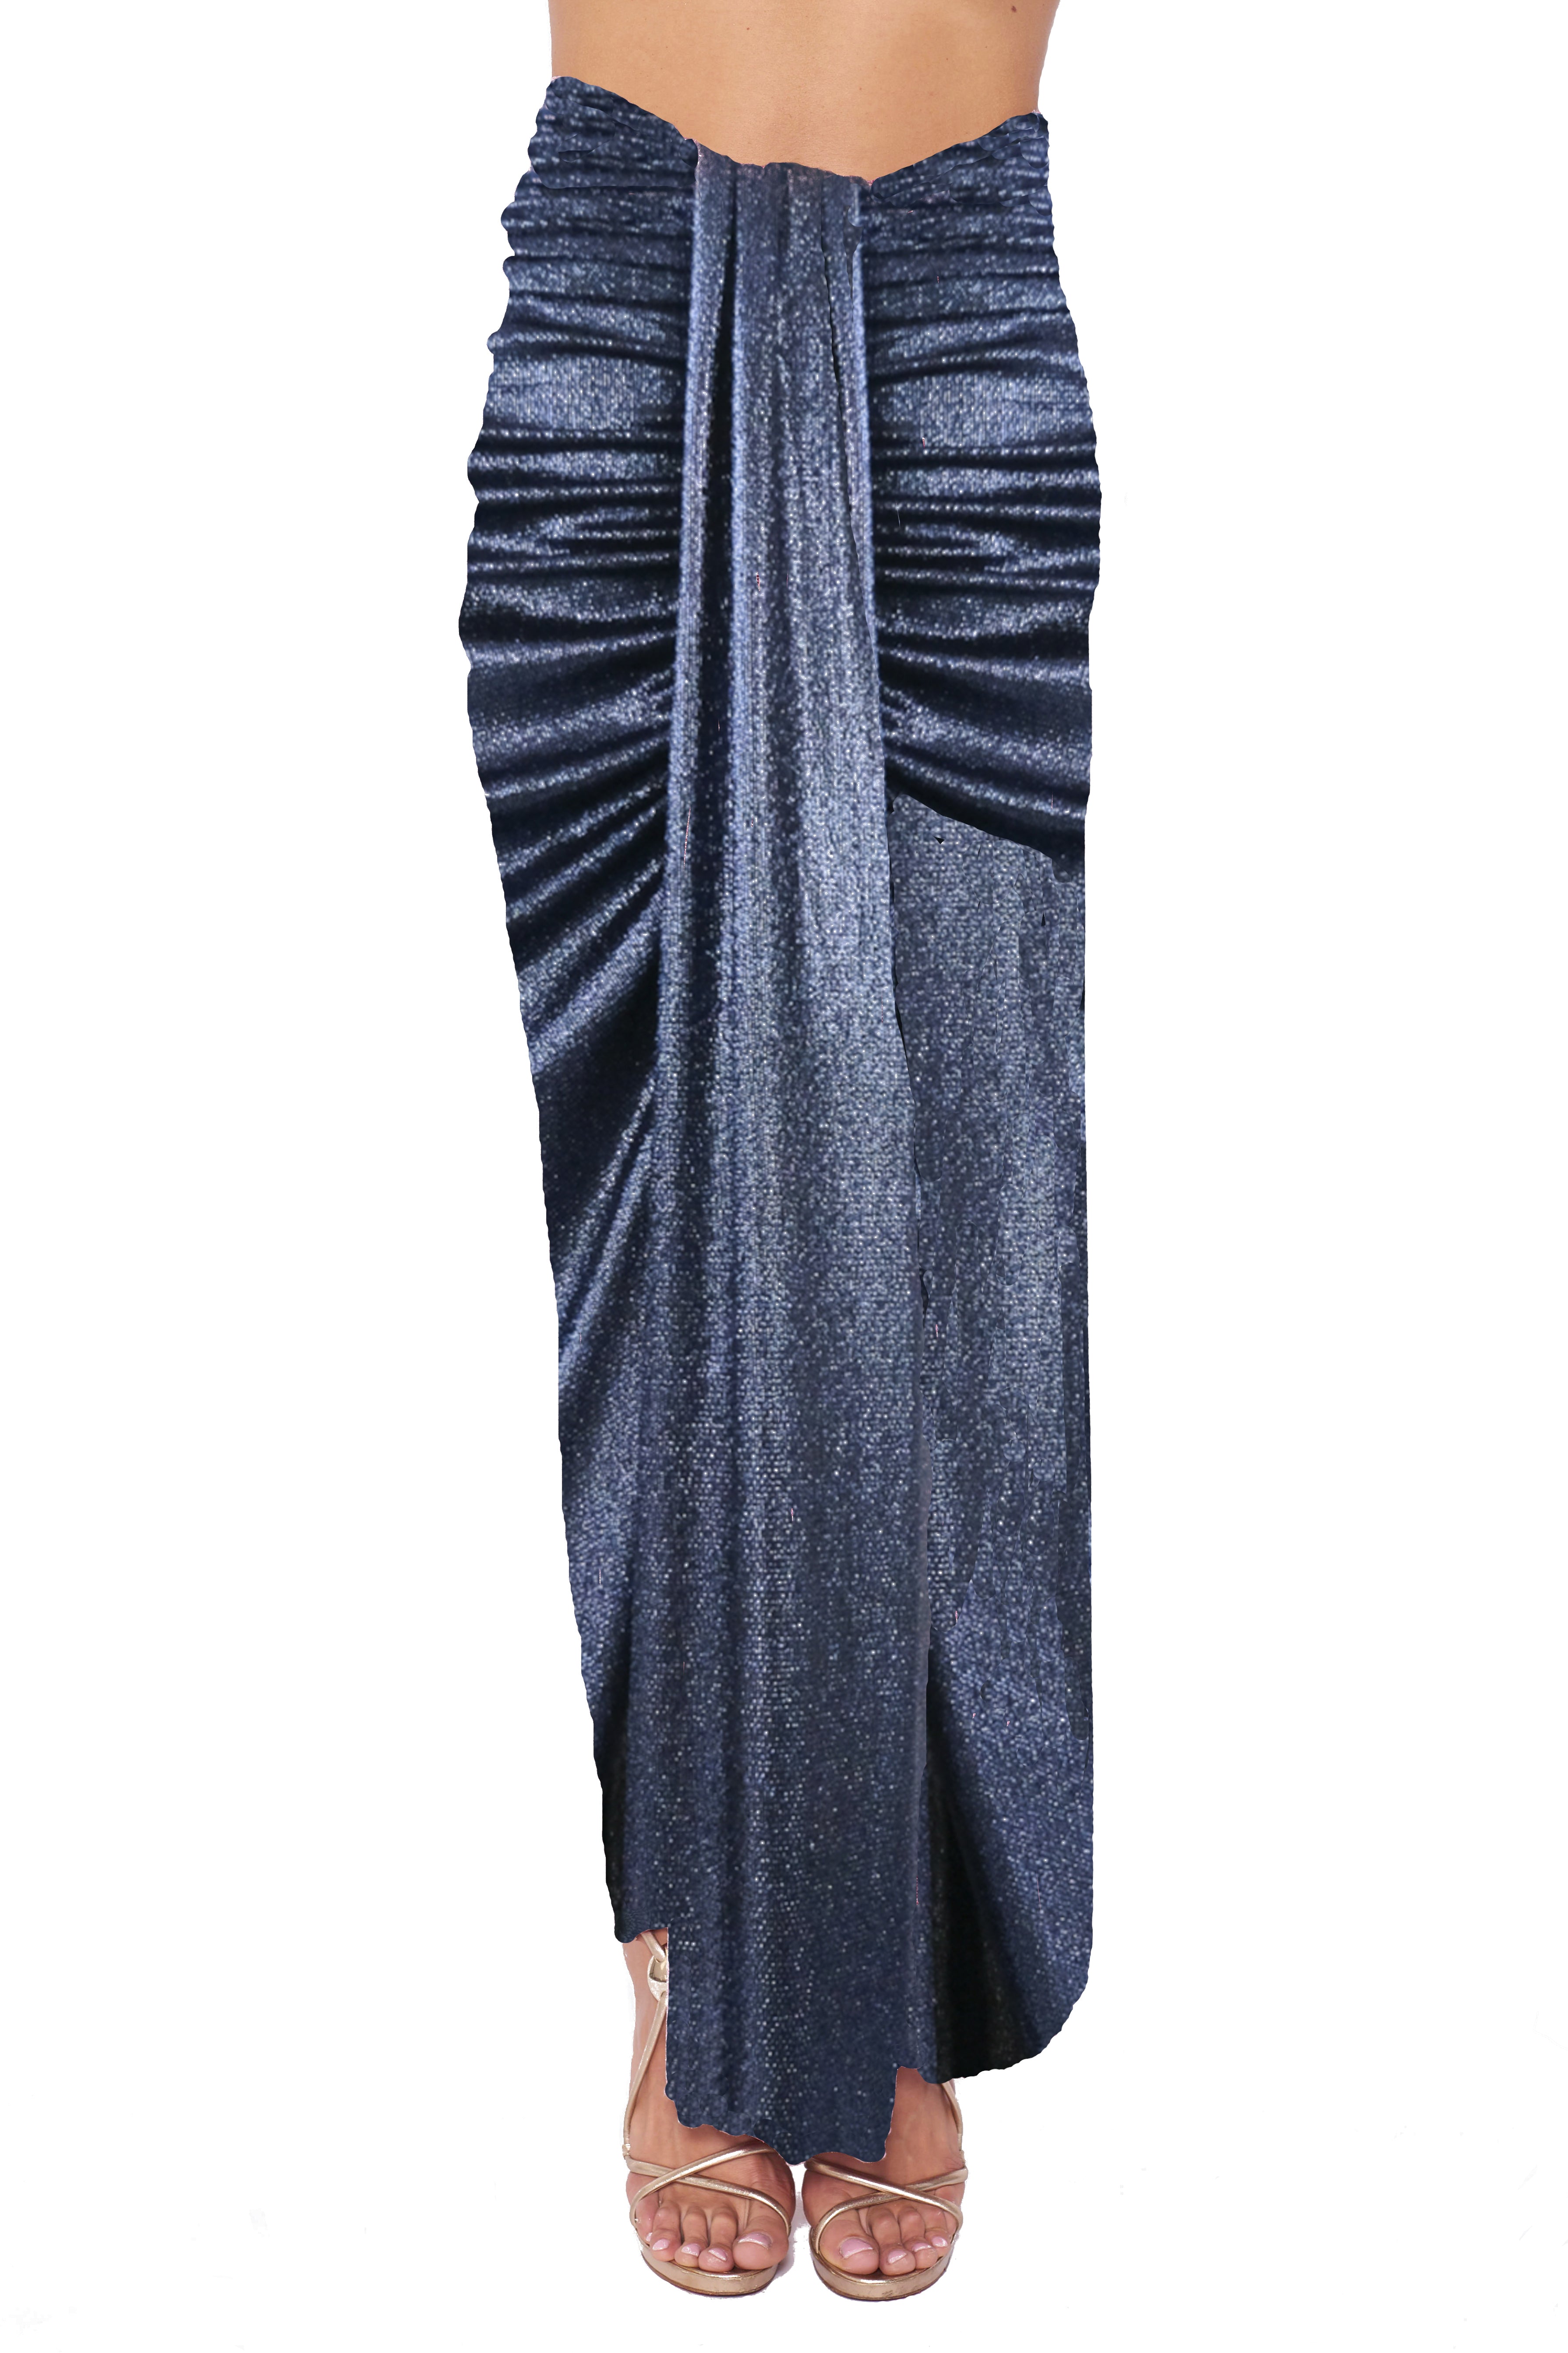 AMANDA - long blue lurex skirt with a slit